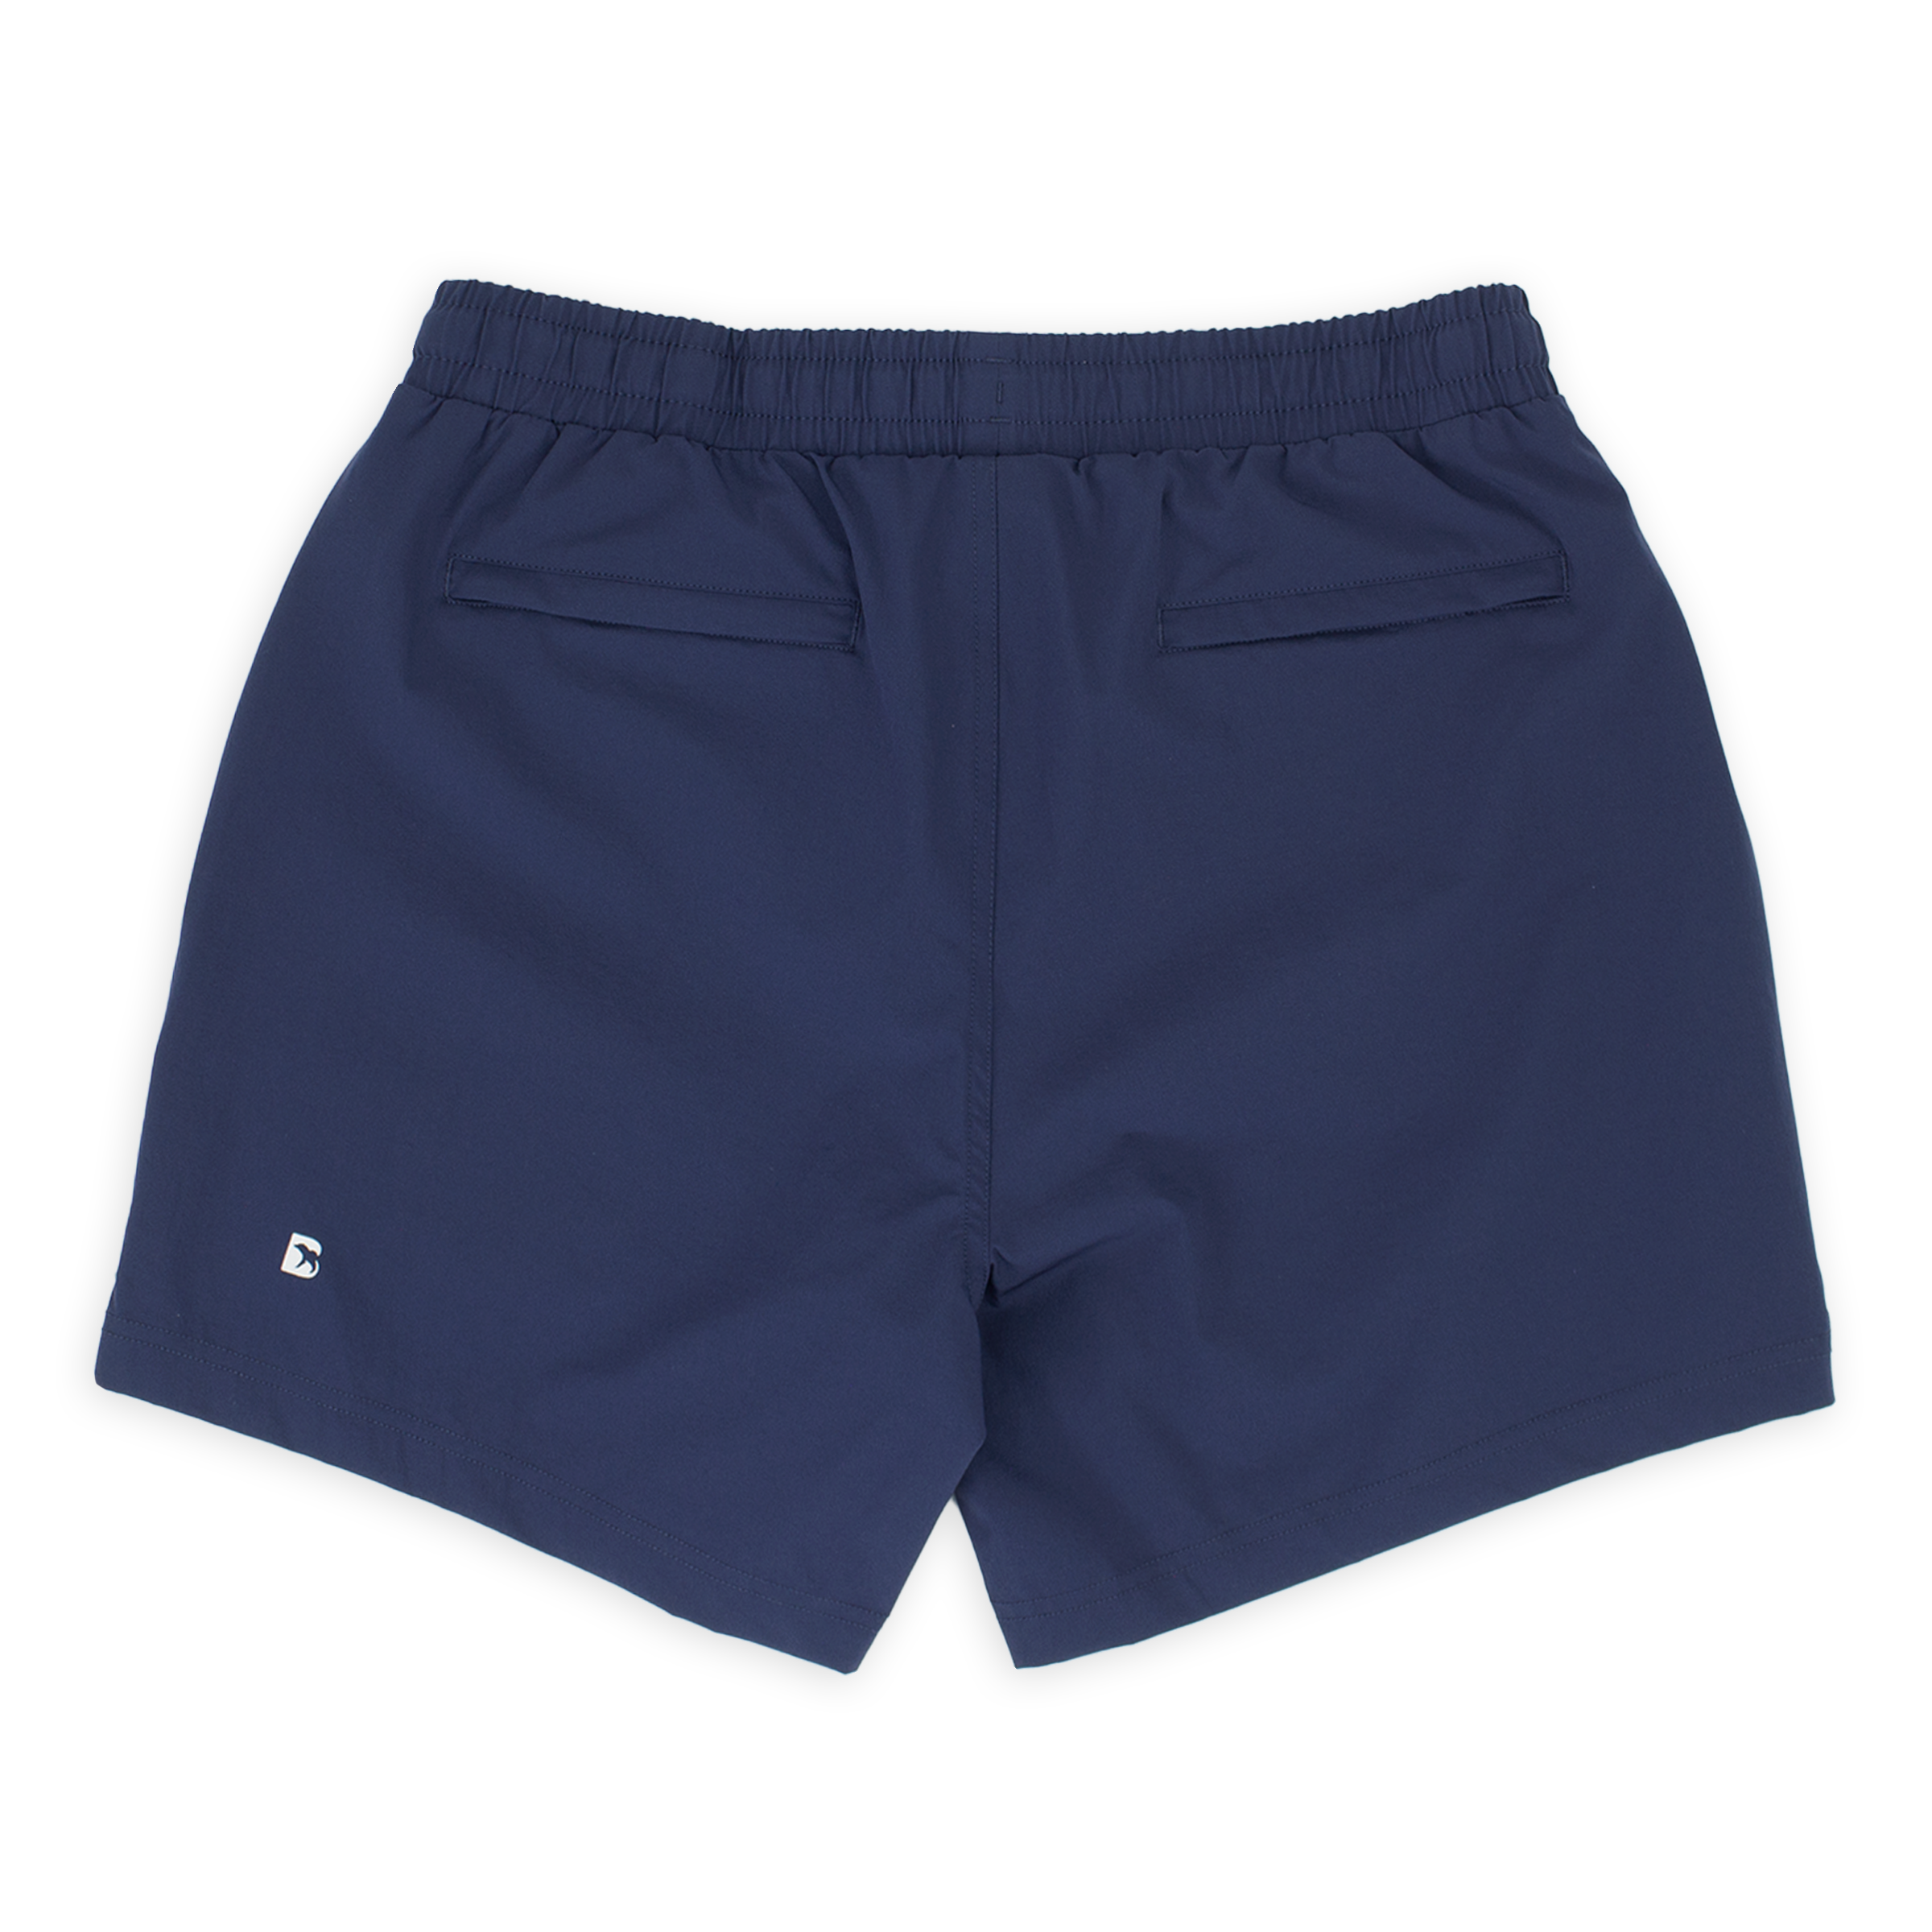 Base Short 5.5" Navy with 2 zipper back pockets and reflective logo